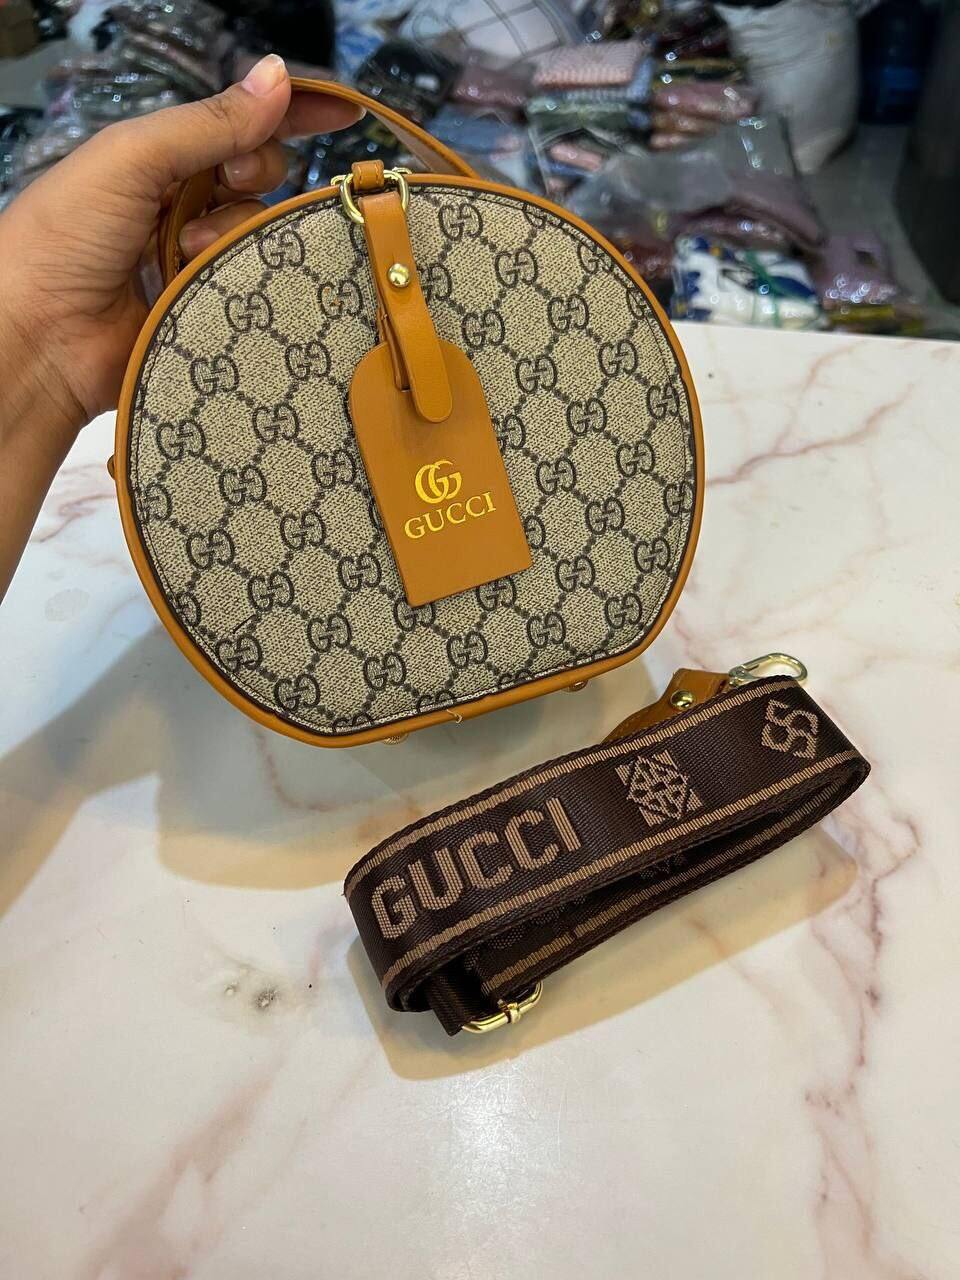 Jual Tas Wanita Gucci Original Model Terbaru & Kekinian - Harga